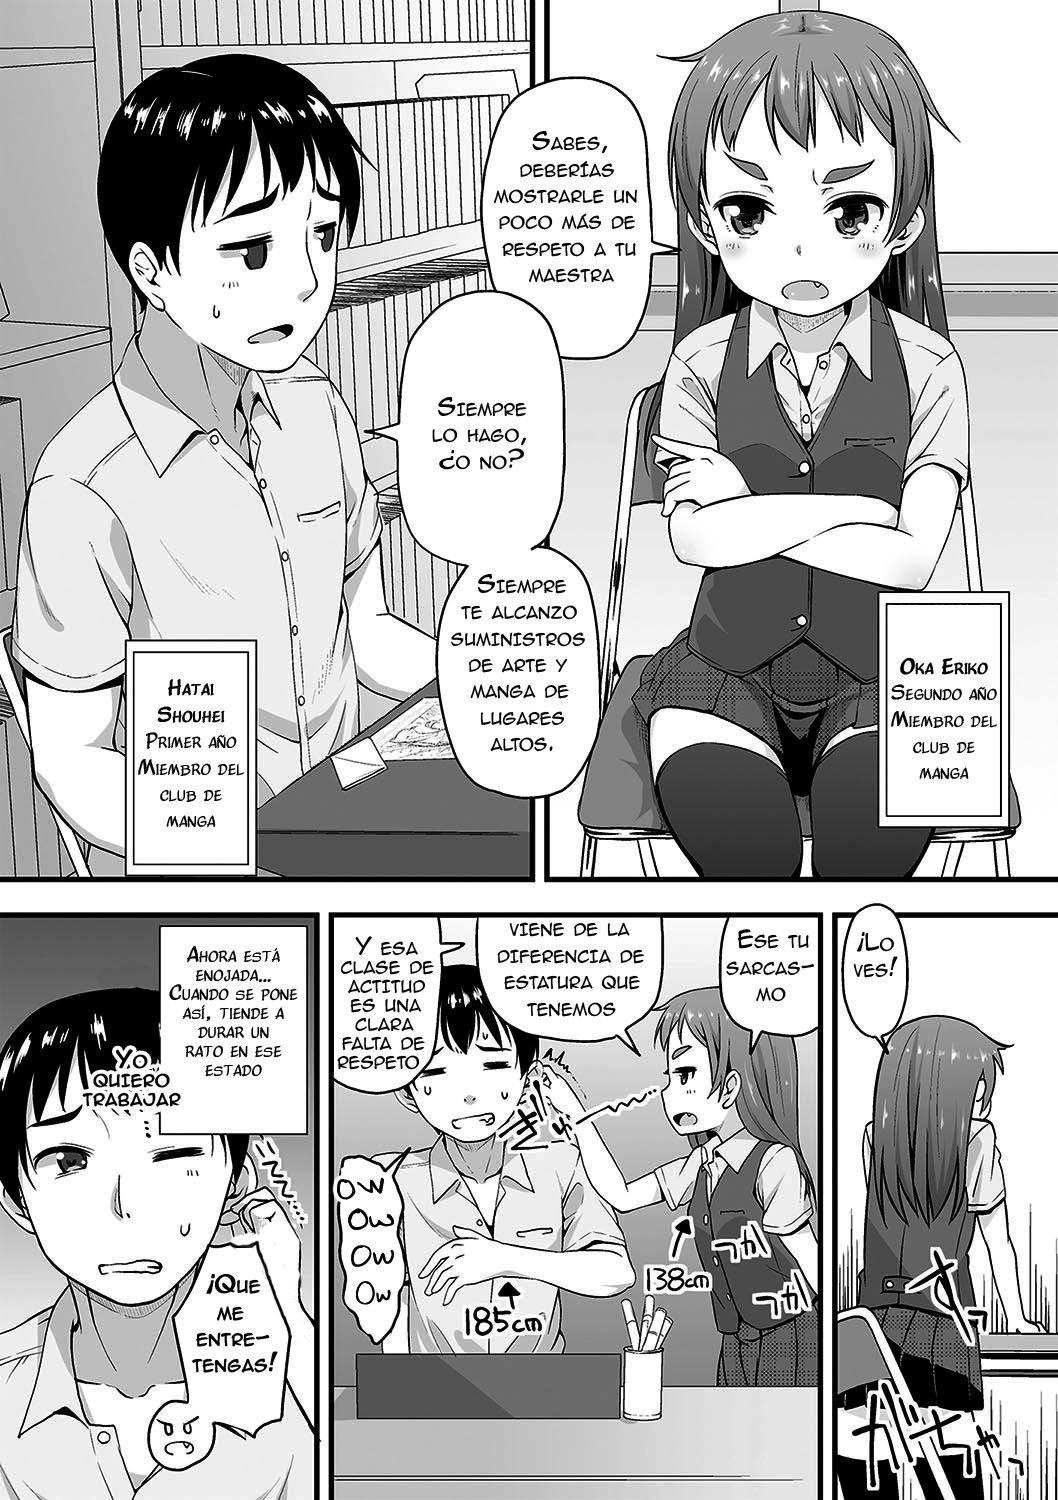 Manken Katsudou Nisshi - Manga Club Activity Log - 1